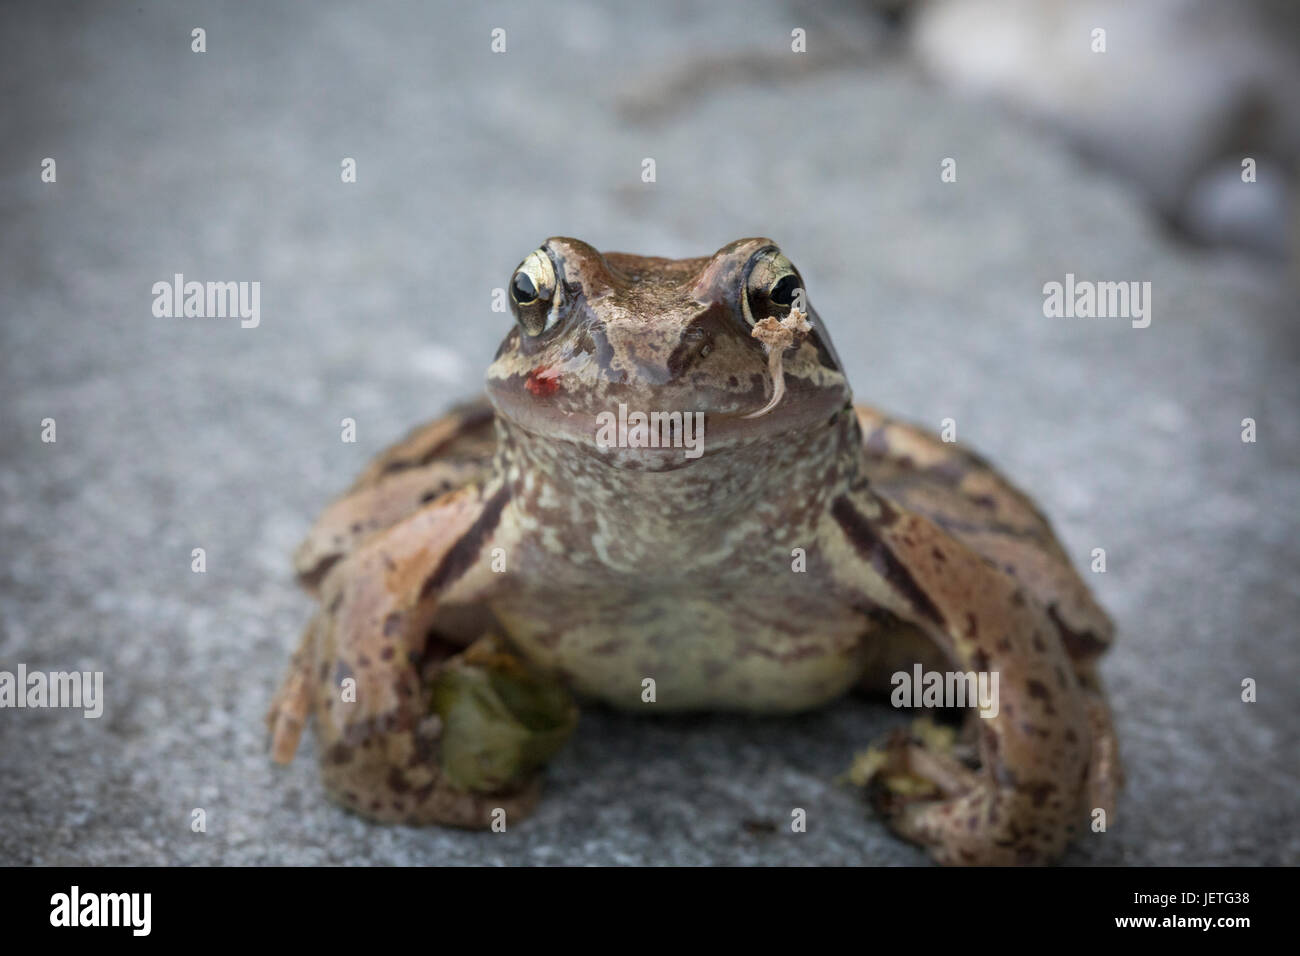 Frog Macroshot Foto Stock